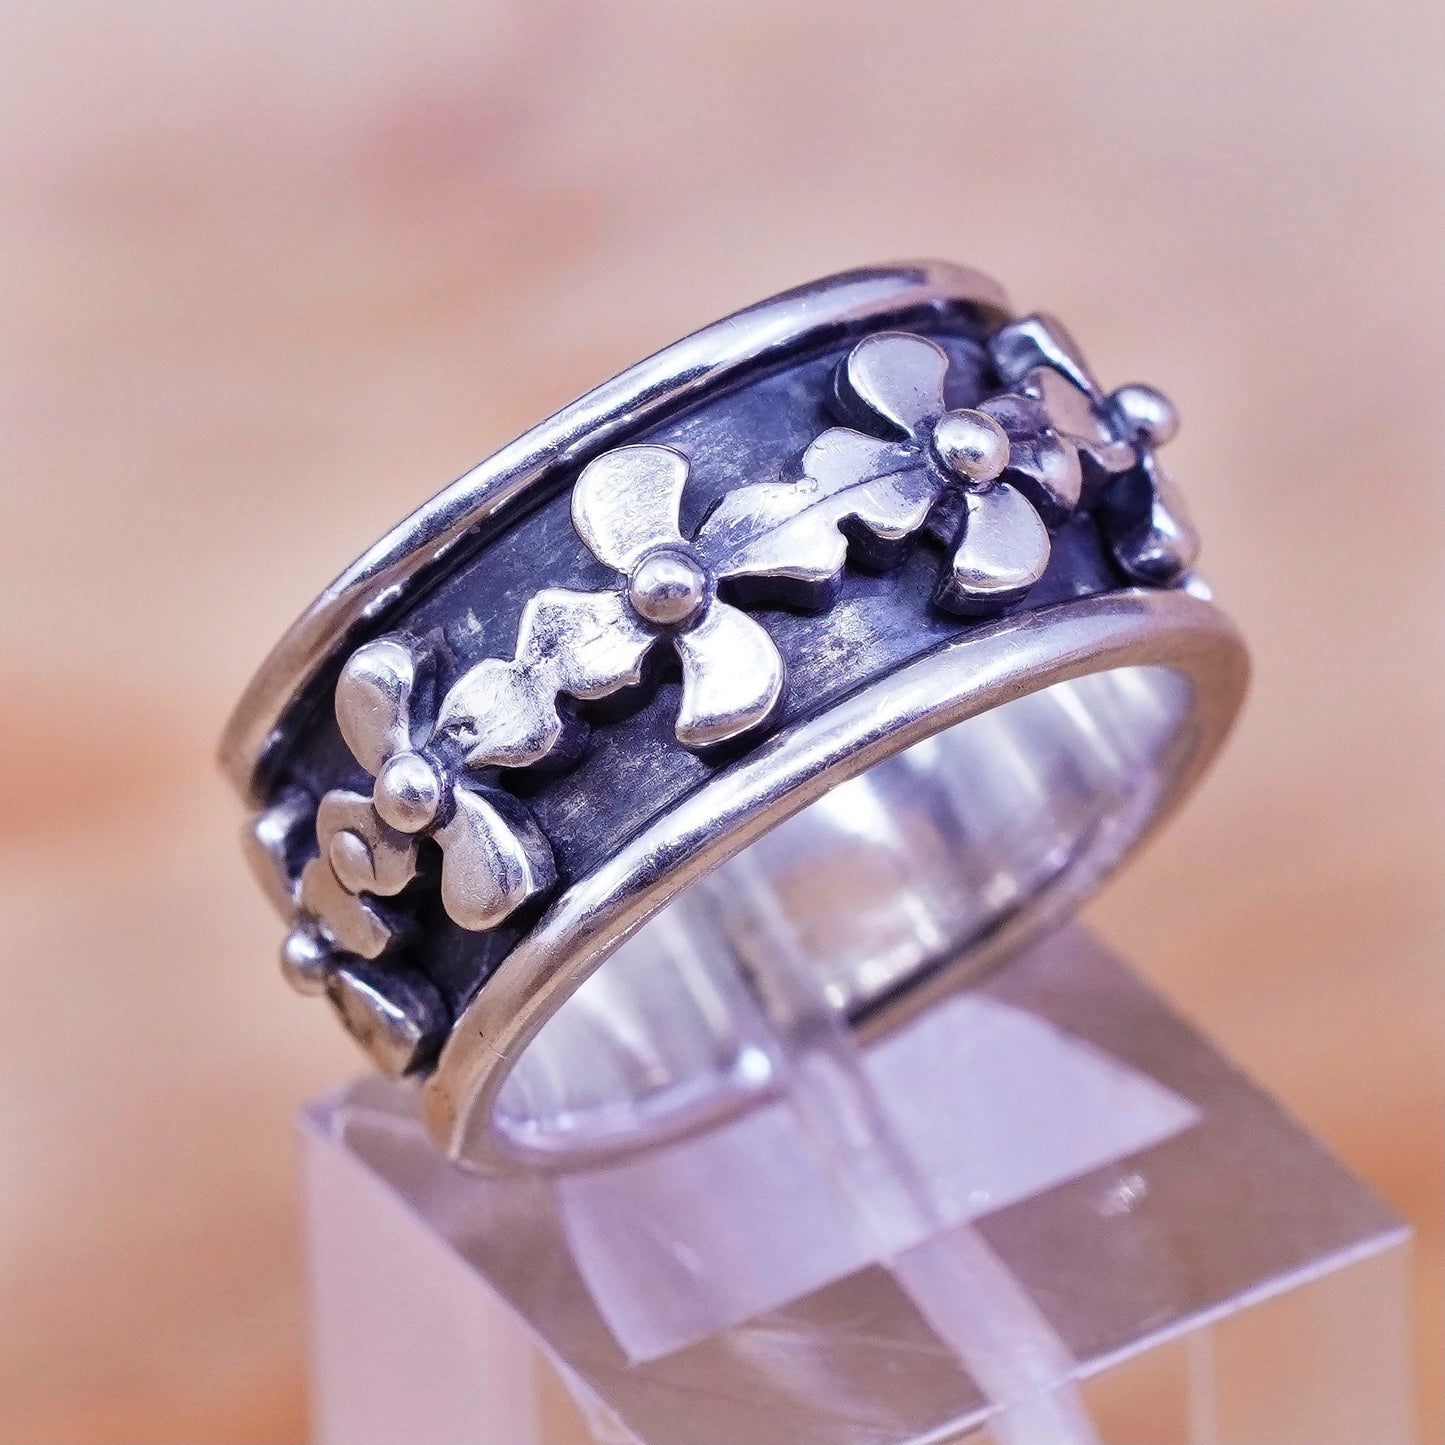 Size 6.5, vintage Sterling silver prayer ring, 925 spinner flower band